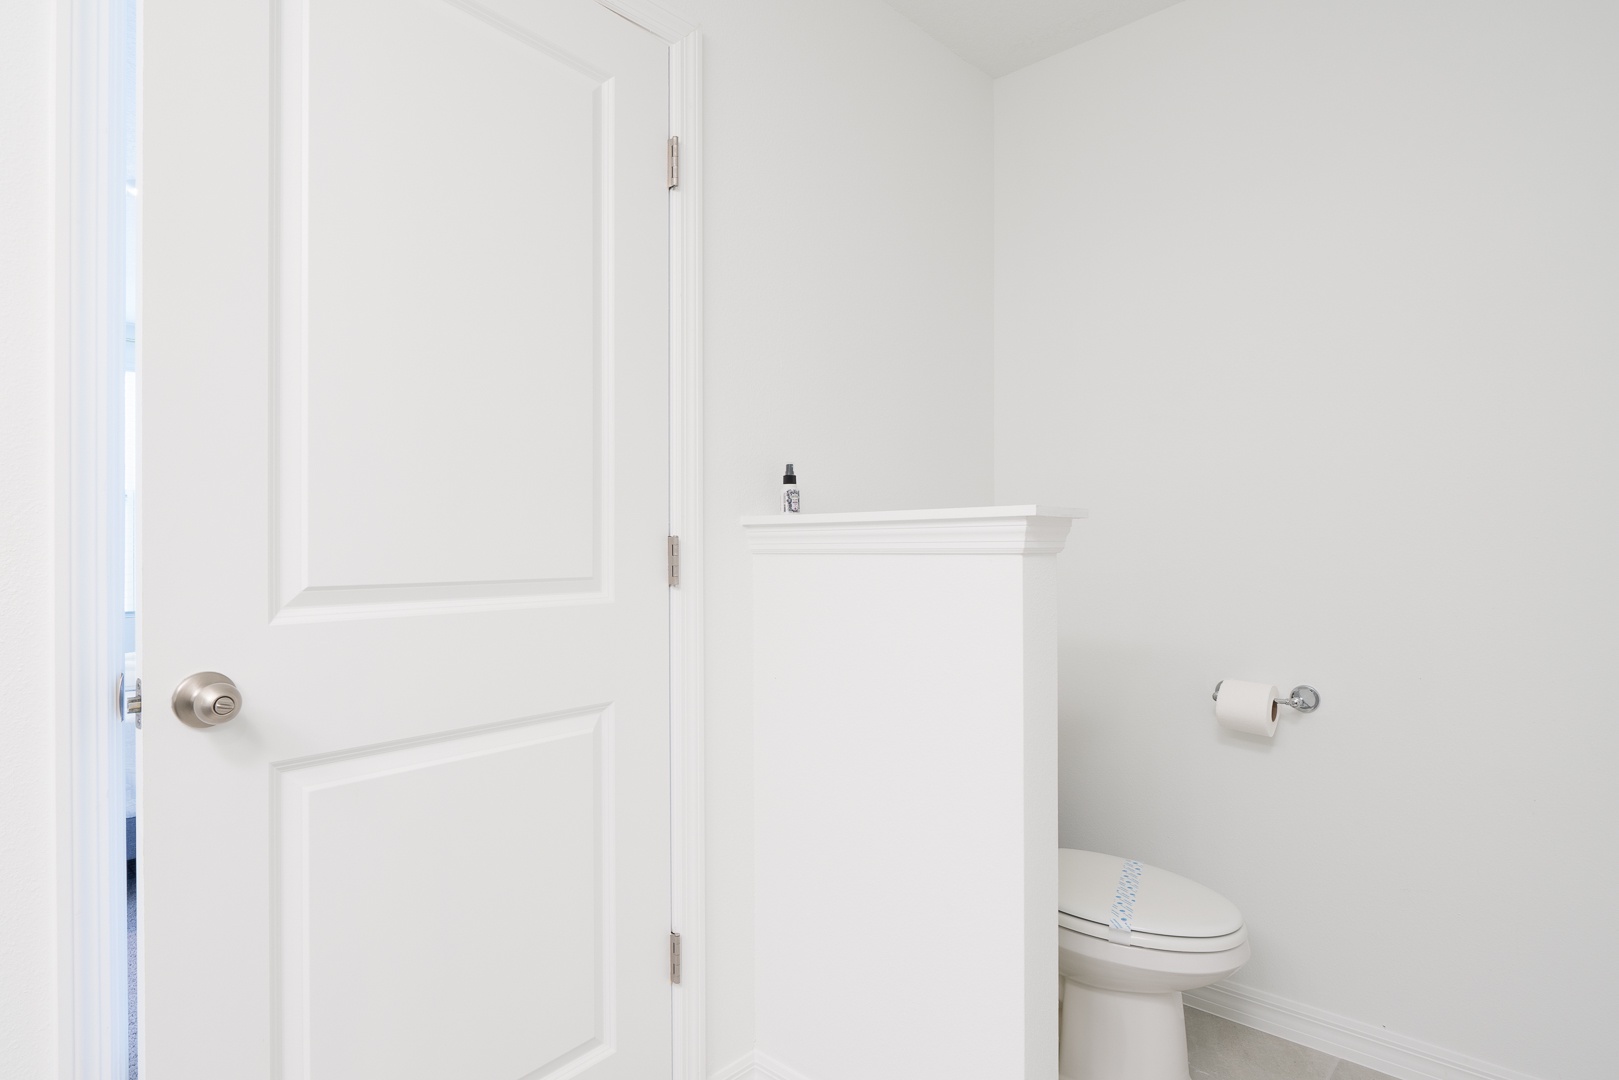 The king en suite bathroom offers an oversized double vanity & glass shower